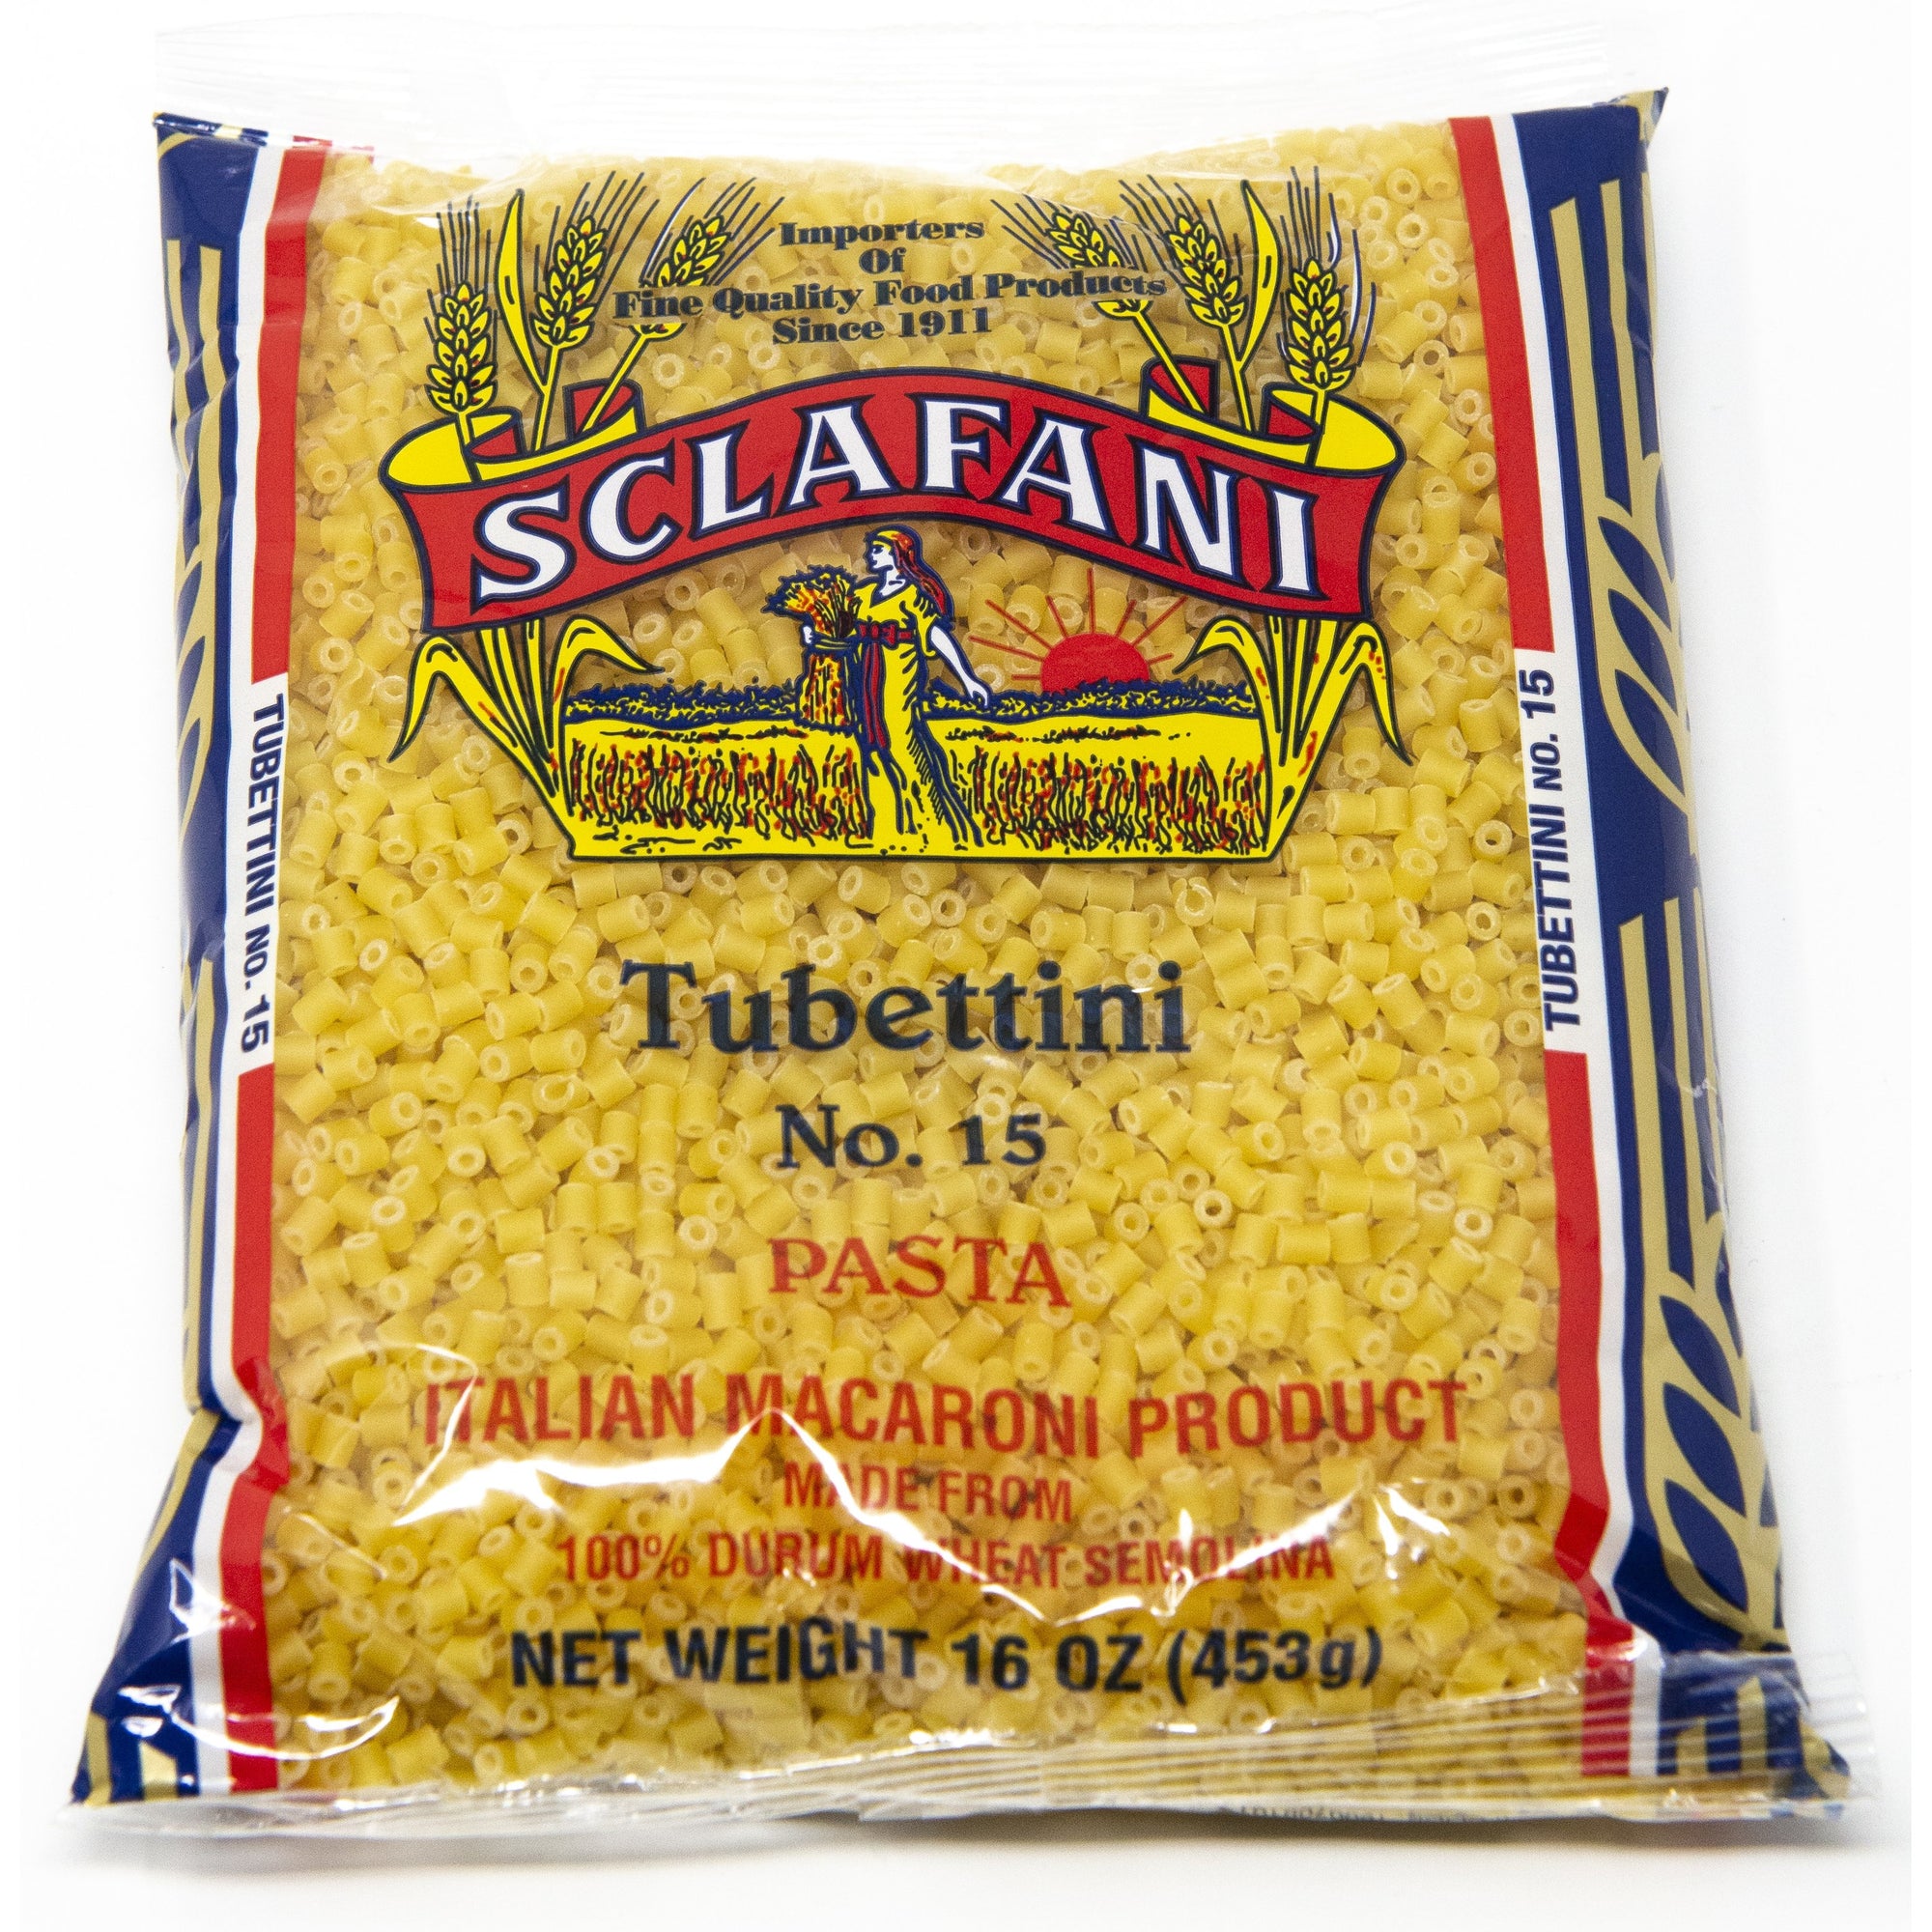 Sclafani Pasta #15 Tubettini 1 lb.